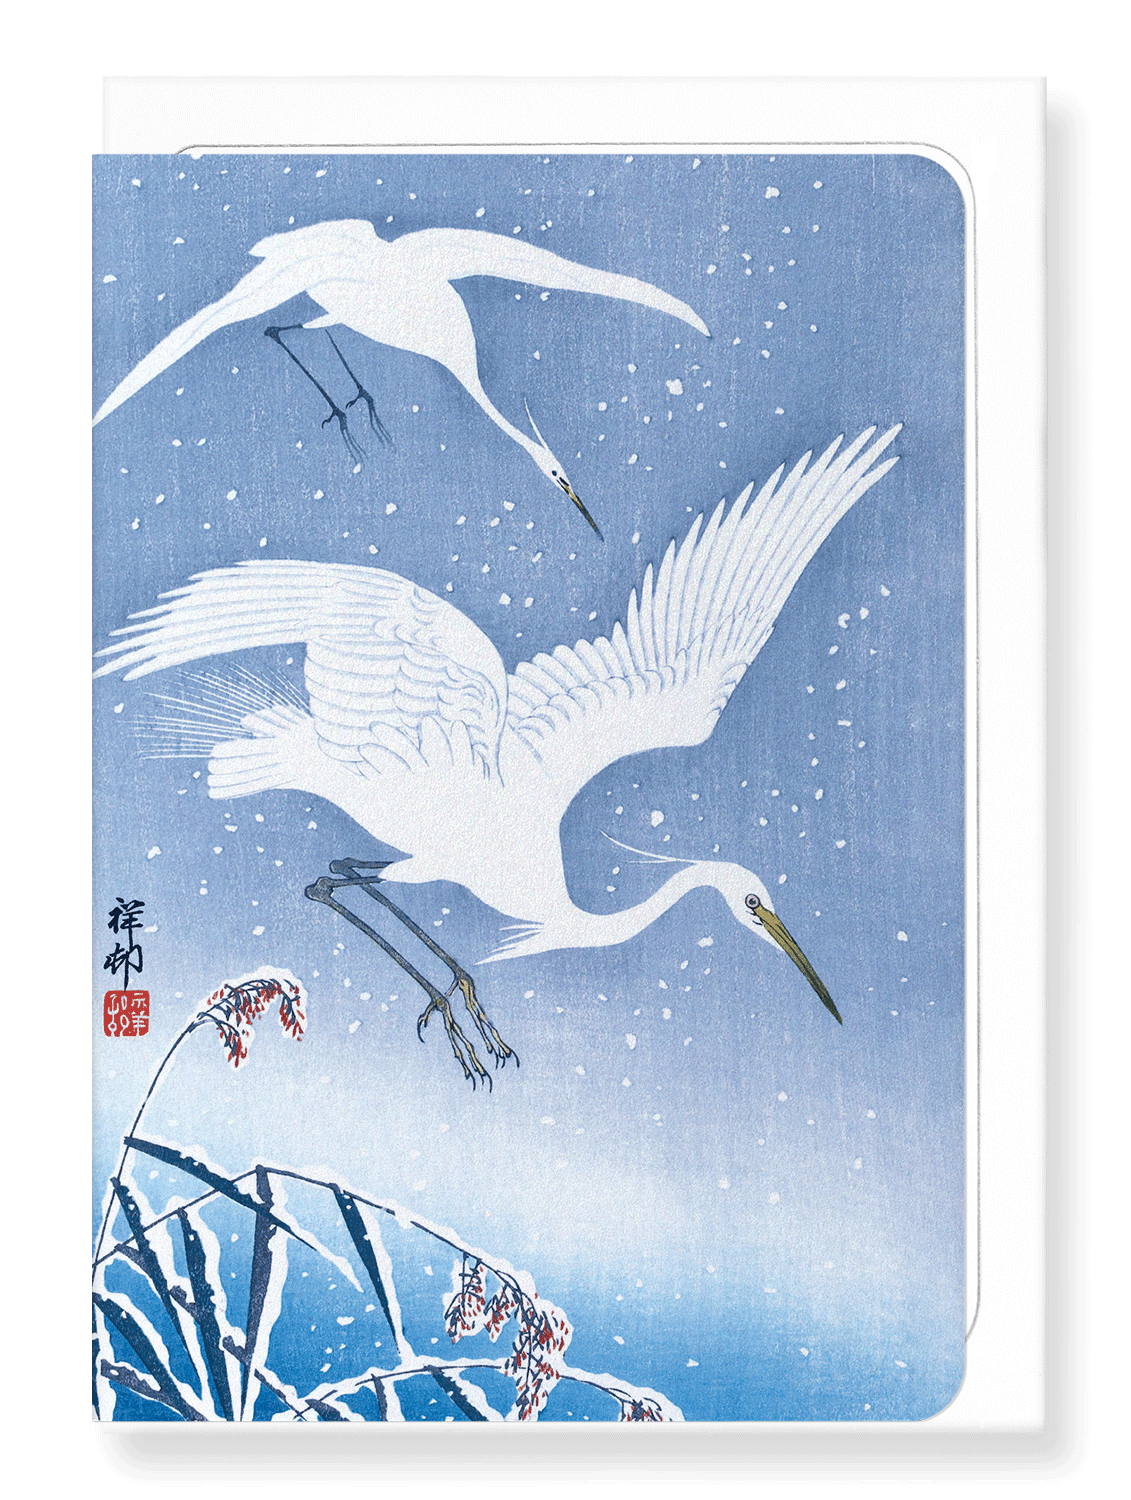 Ezen Designs - Egrets descending in snow - Greeting Card - Front